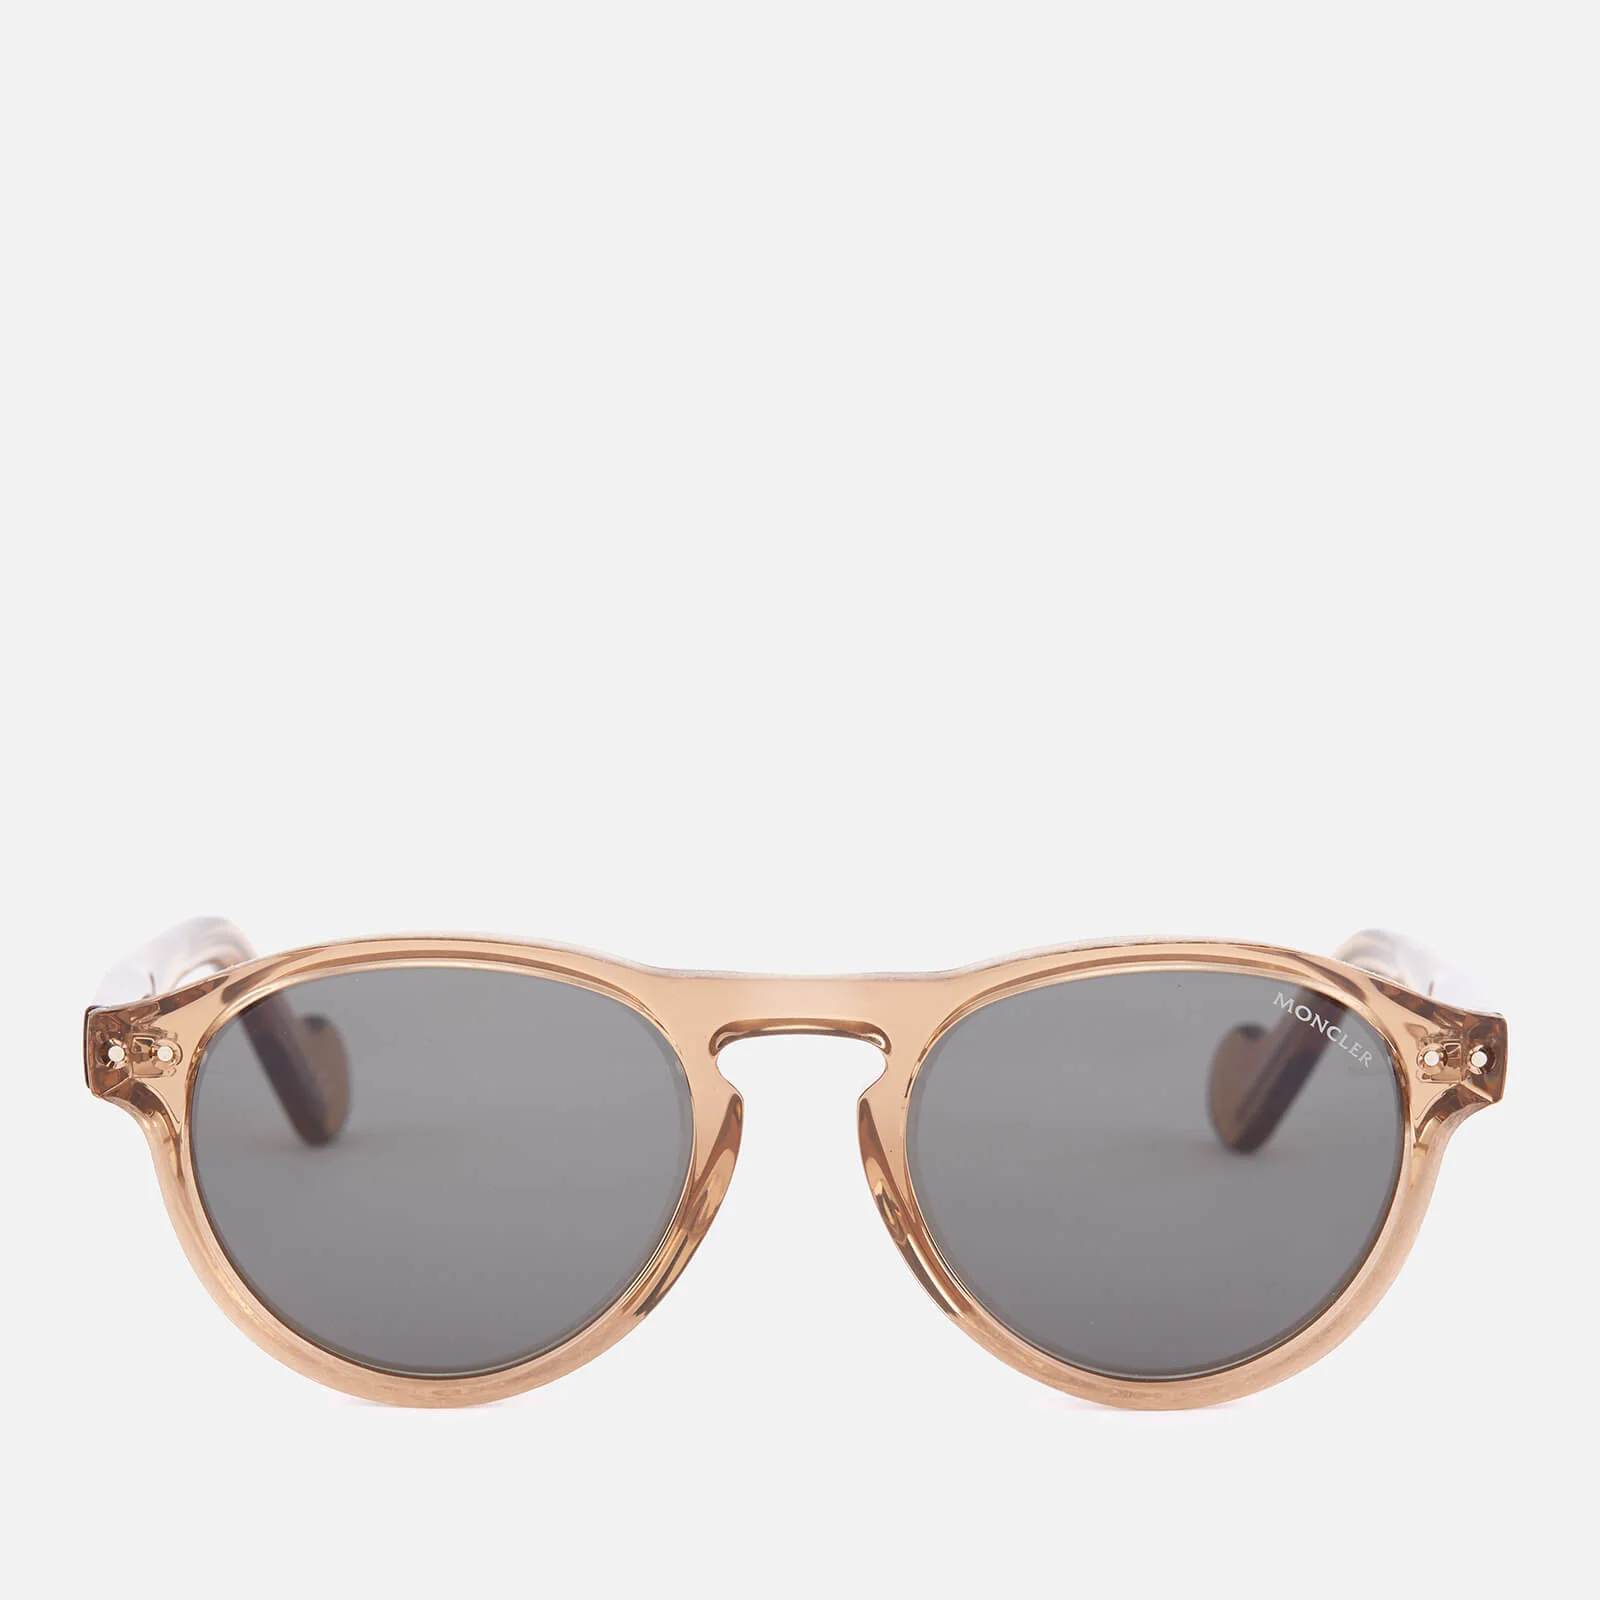 Moncler Men's Round Frame Sunglasses - Shiny Light Brown/Green Image 1